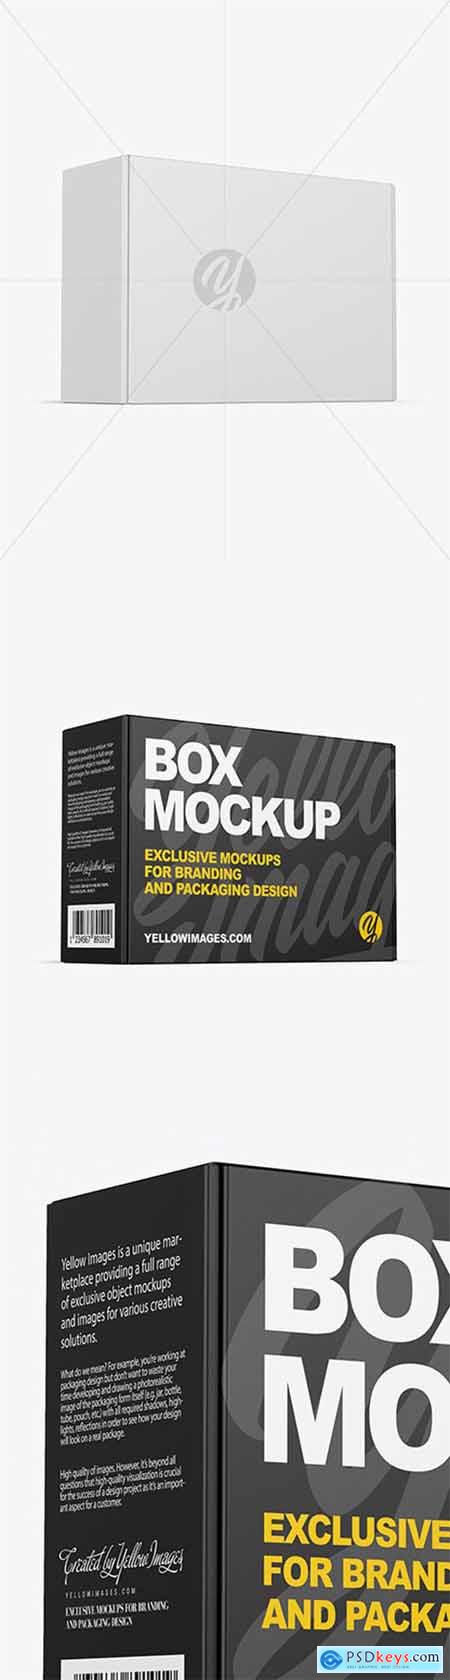 Paper Box Mockup 54457